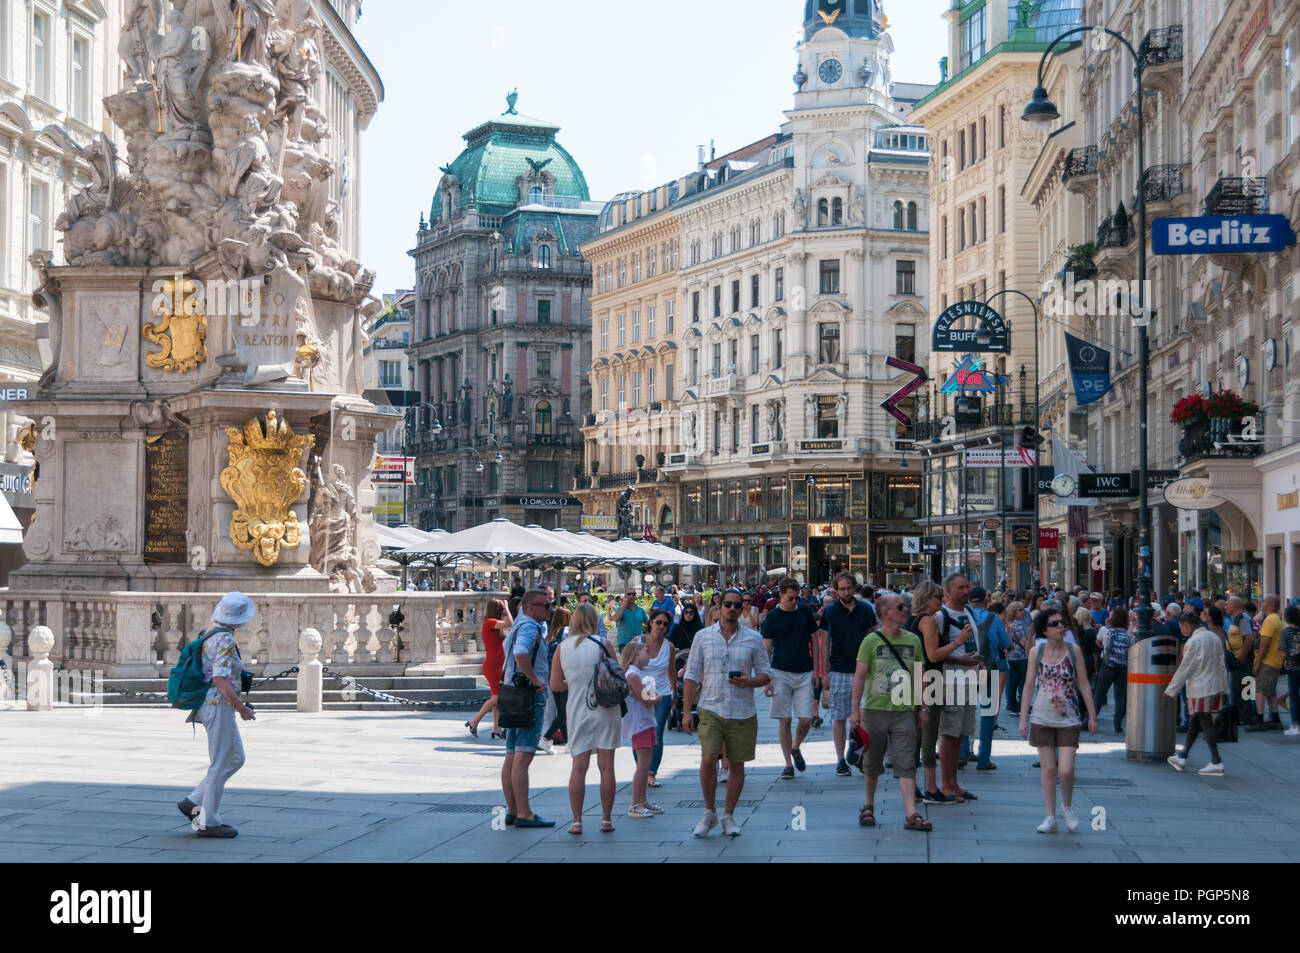 Plague Column and Graben street, Vienna, Austria Stock Photo